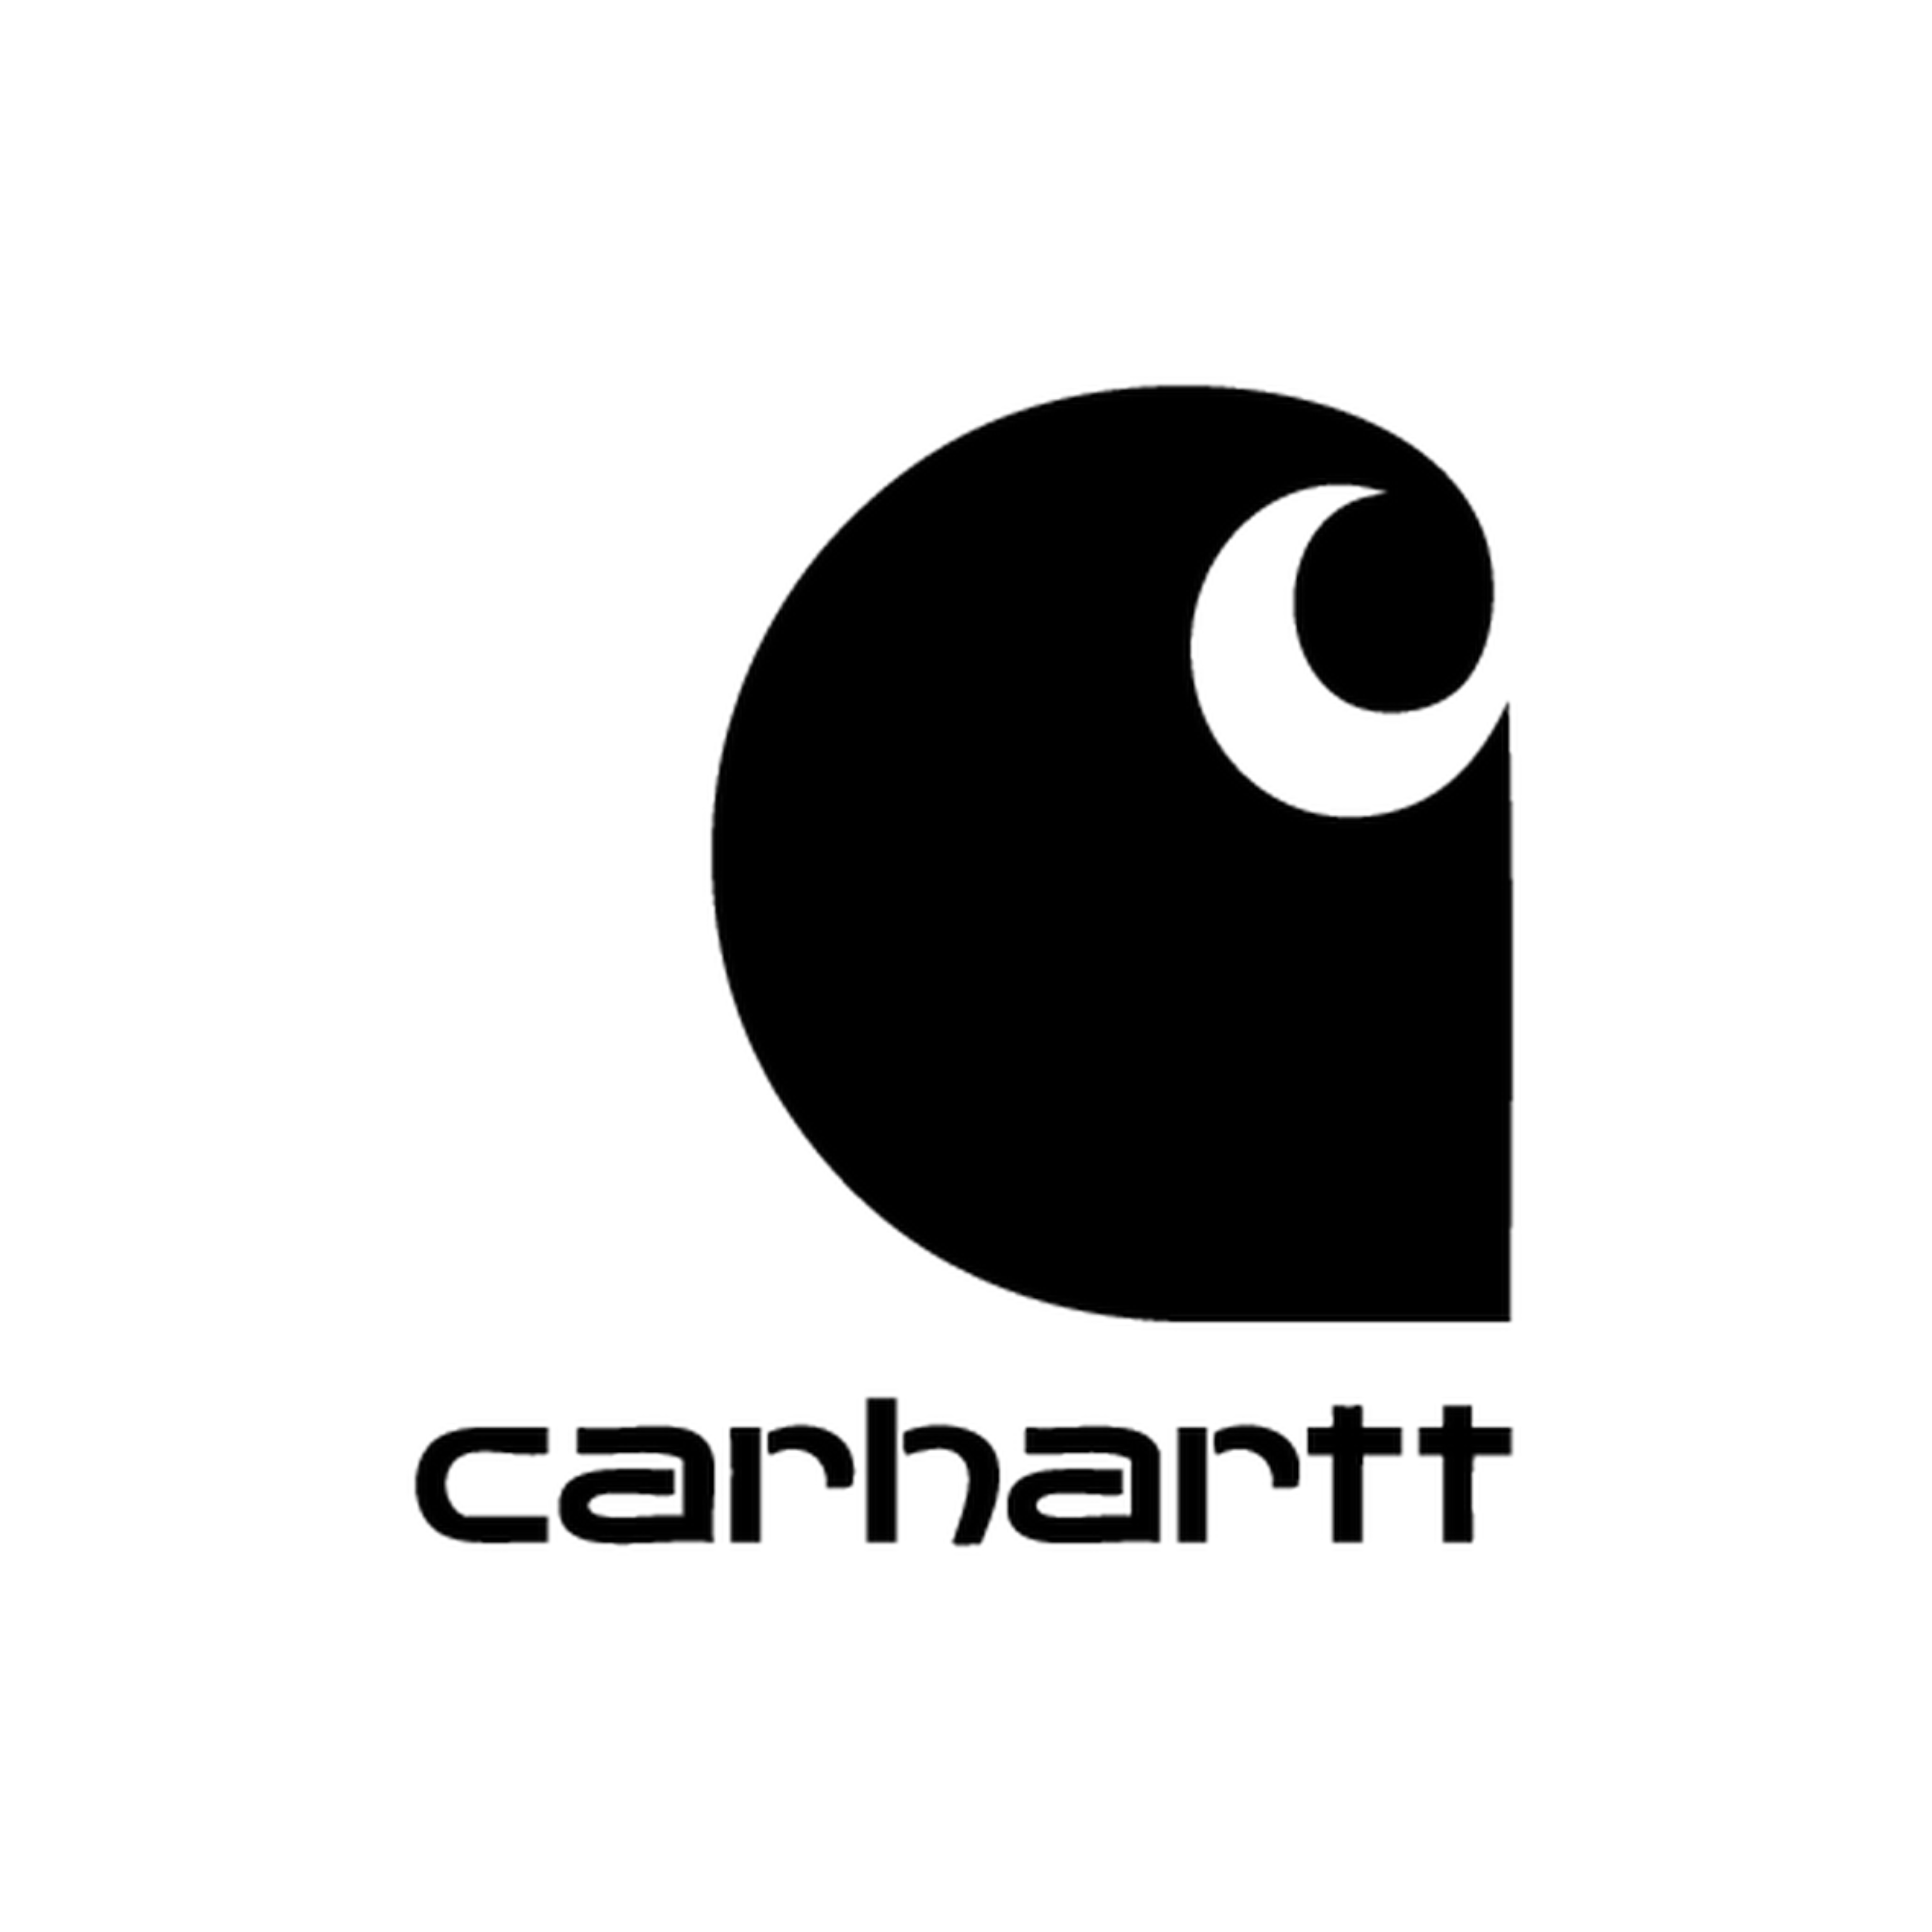 carhartt freetoedit #carhartt sticker by @elenlancel